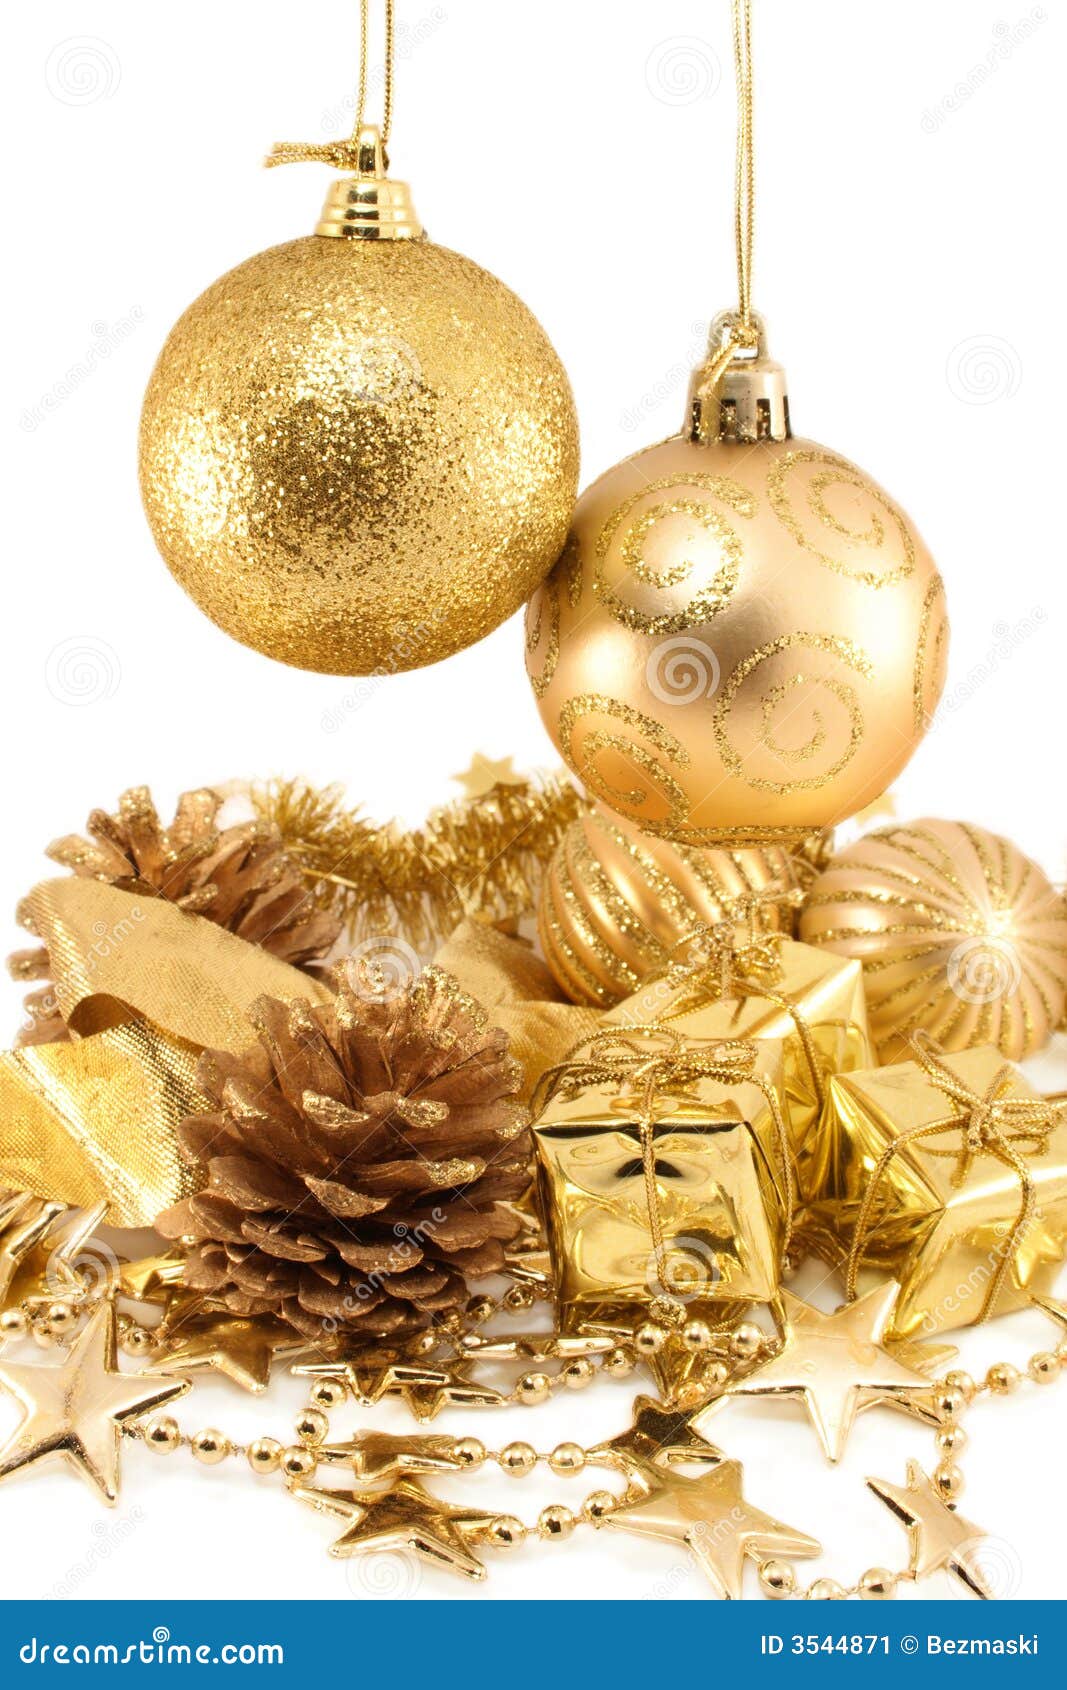 Golden Christmas Decoration Stock Image - Image of assortment ...